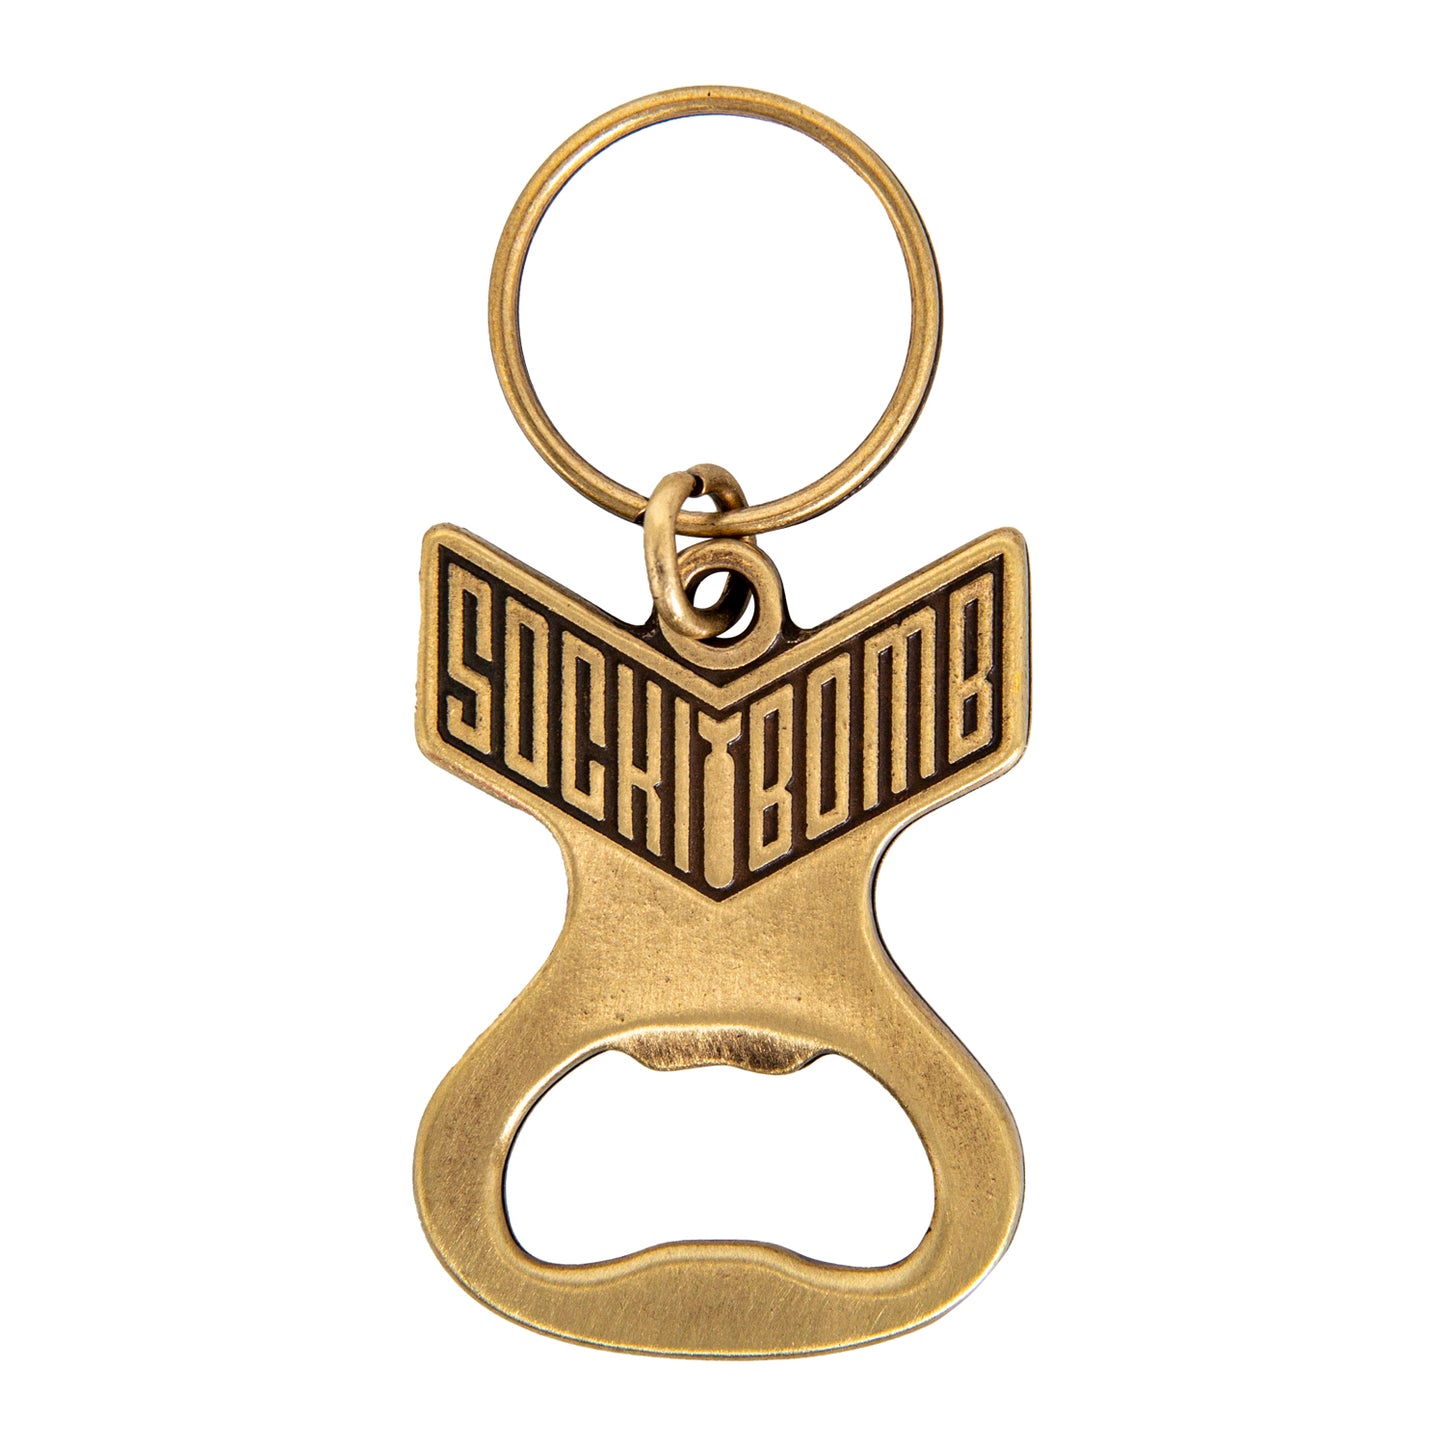 Sockibomb Brass Bottle Opener Keychain